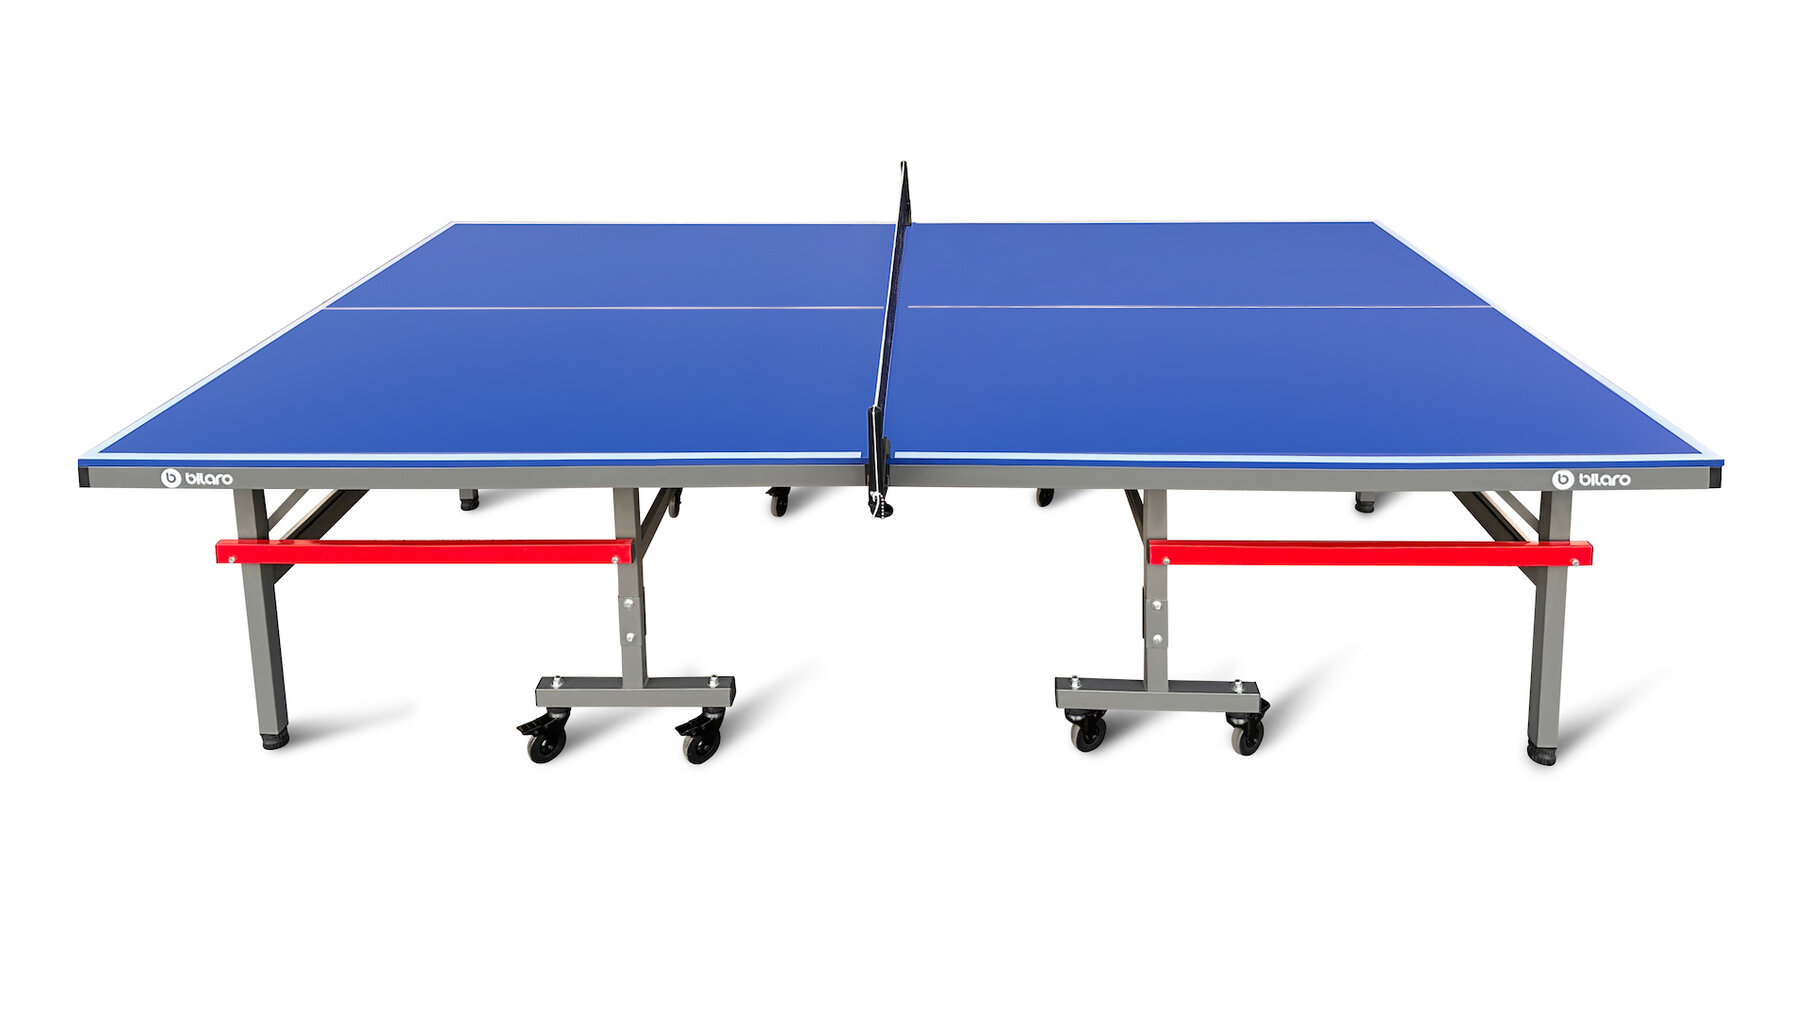 Stalo teniso stalas Bilaro Hoko Outdoor, mėlynas цена и информация | Stalo teniso stalai ir uždangalai | pigu.lt